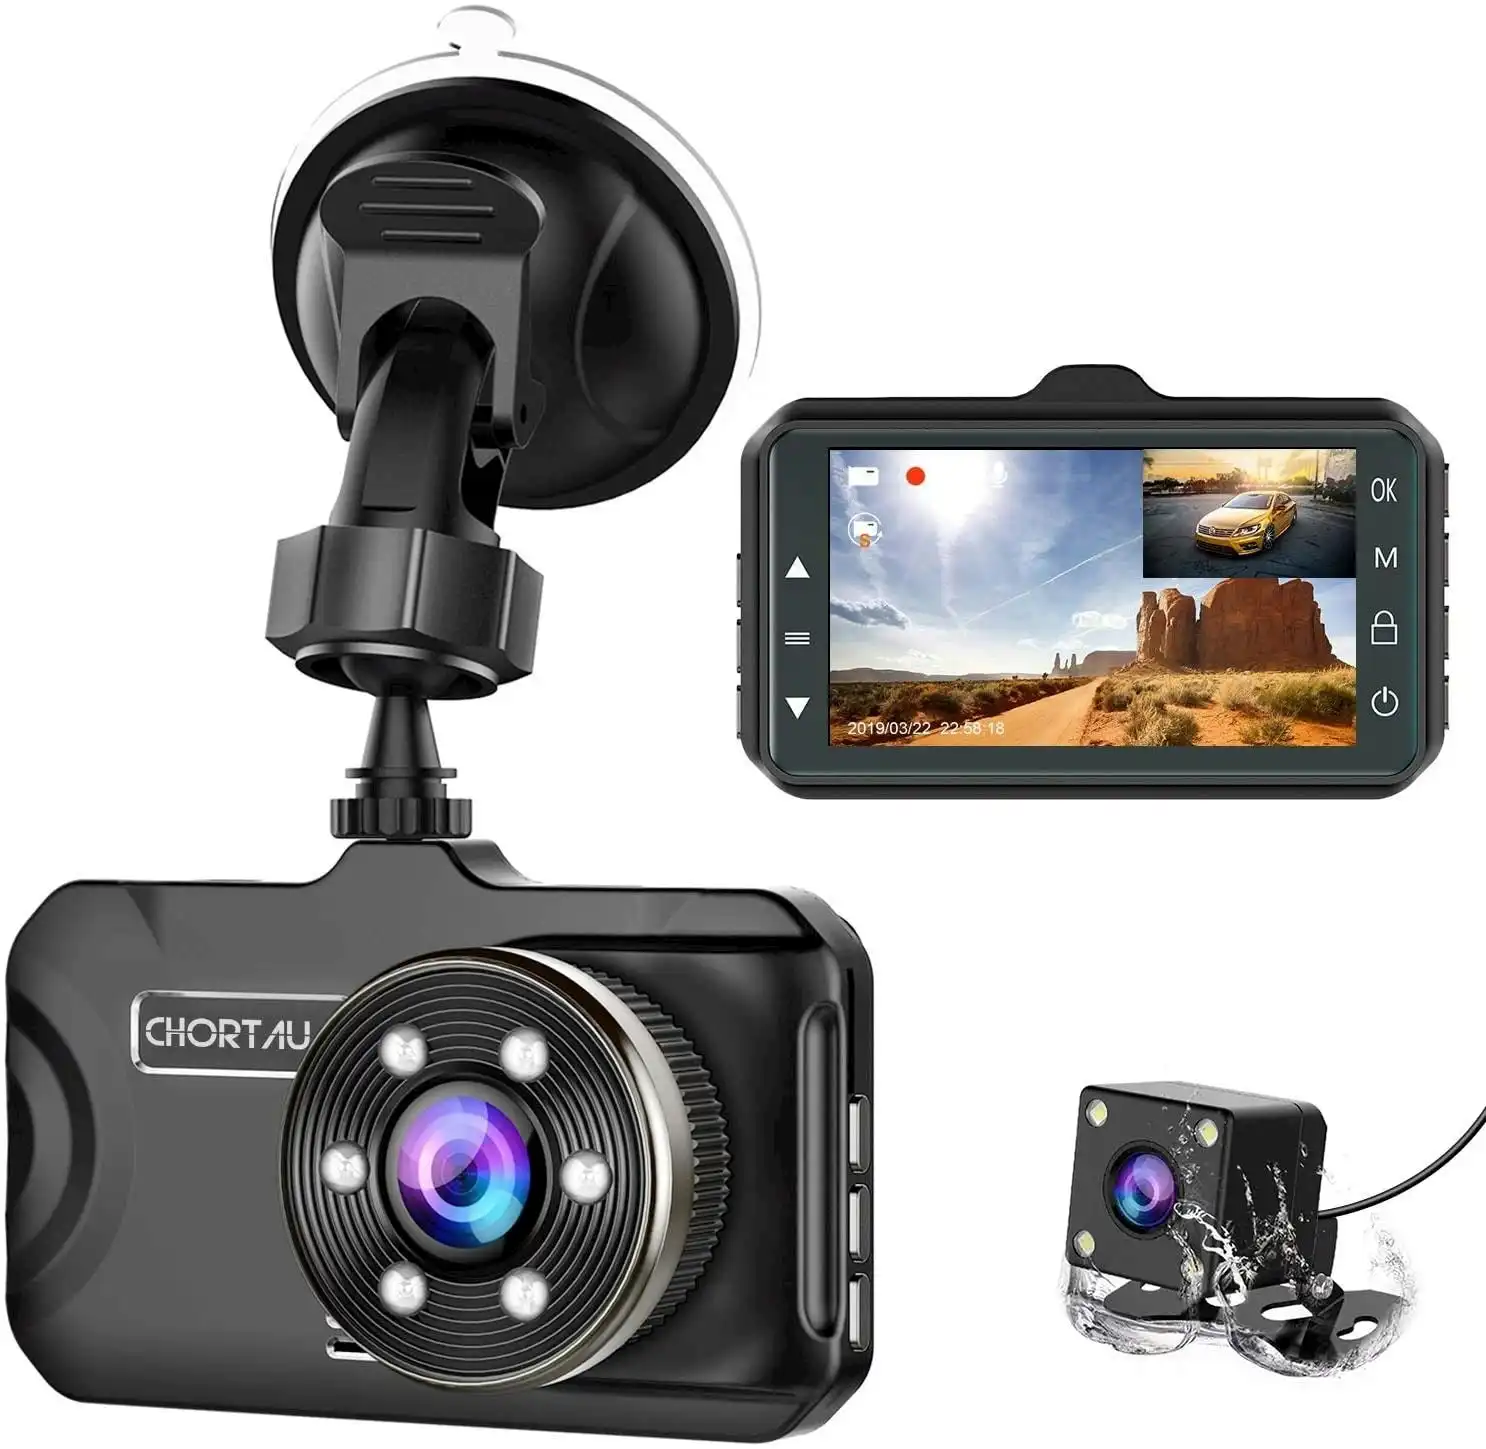 CHORTAU Dash Cam Front and Rear Dual Dash Cam 3 inch Dashboard Camera Full HD 170° Wide Angle Backup Camera with Night Vision WDR G-Sensor Parking Mon